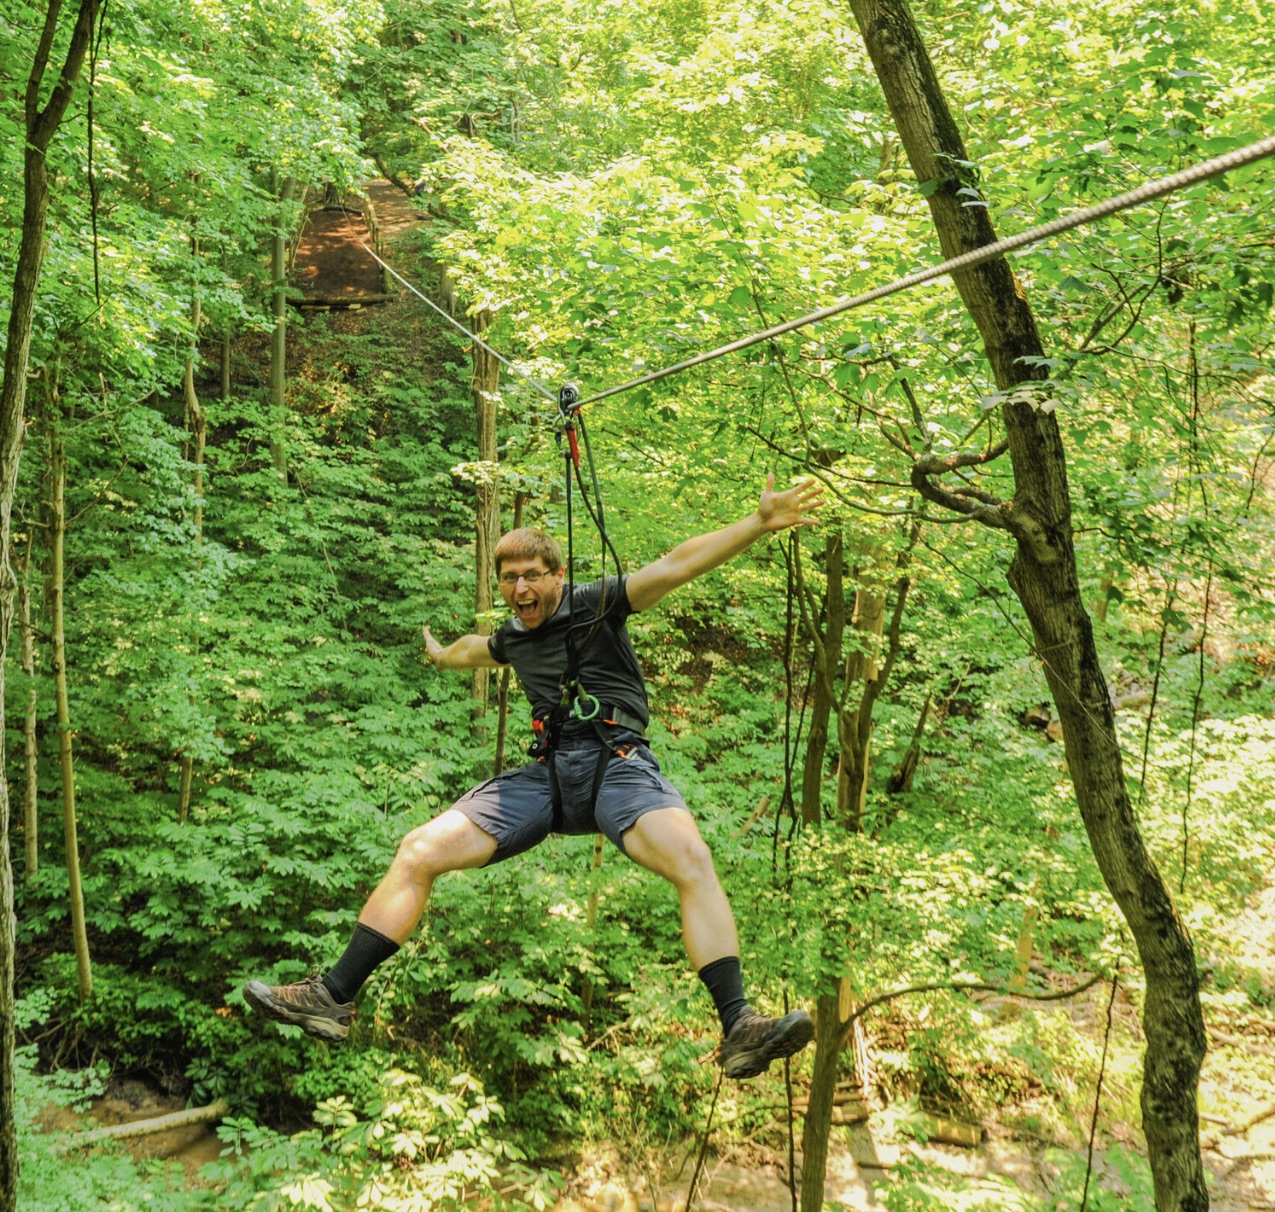 a man in a dark shirt and shorts ziplining through a green forest